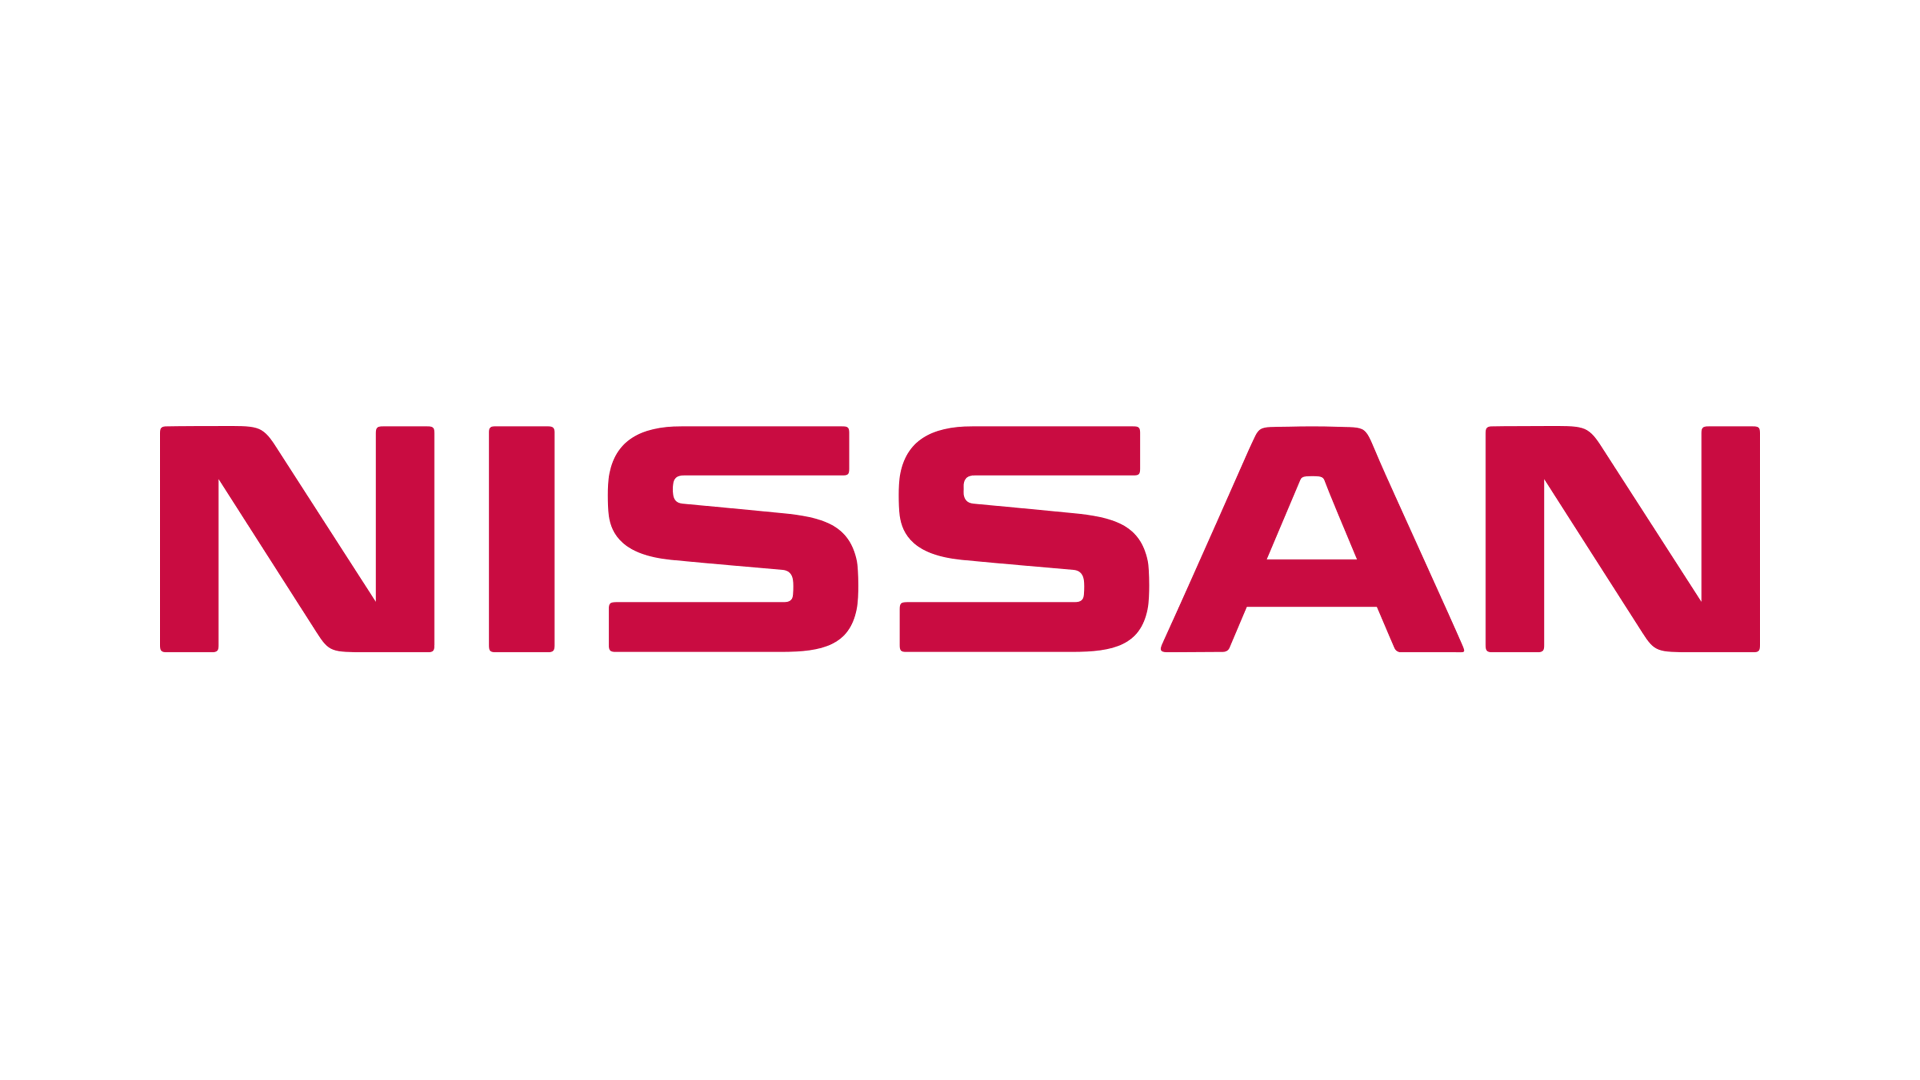 Nissan car logo PNG brand ima